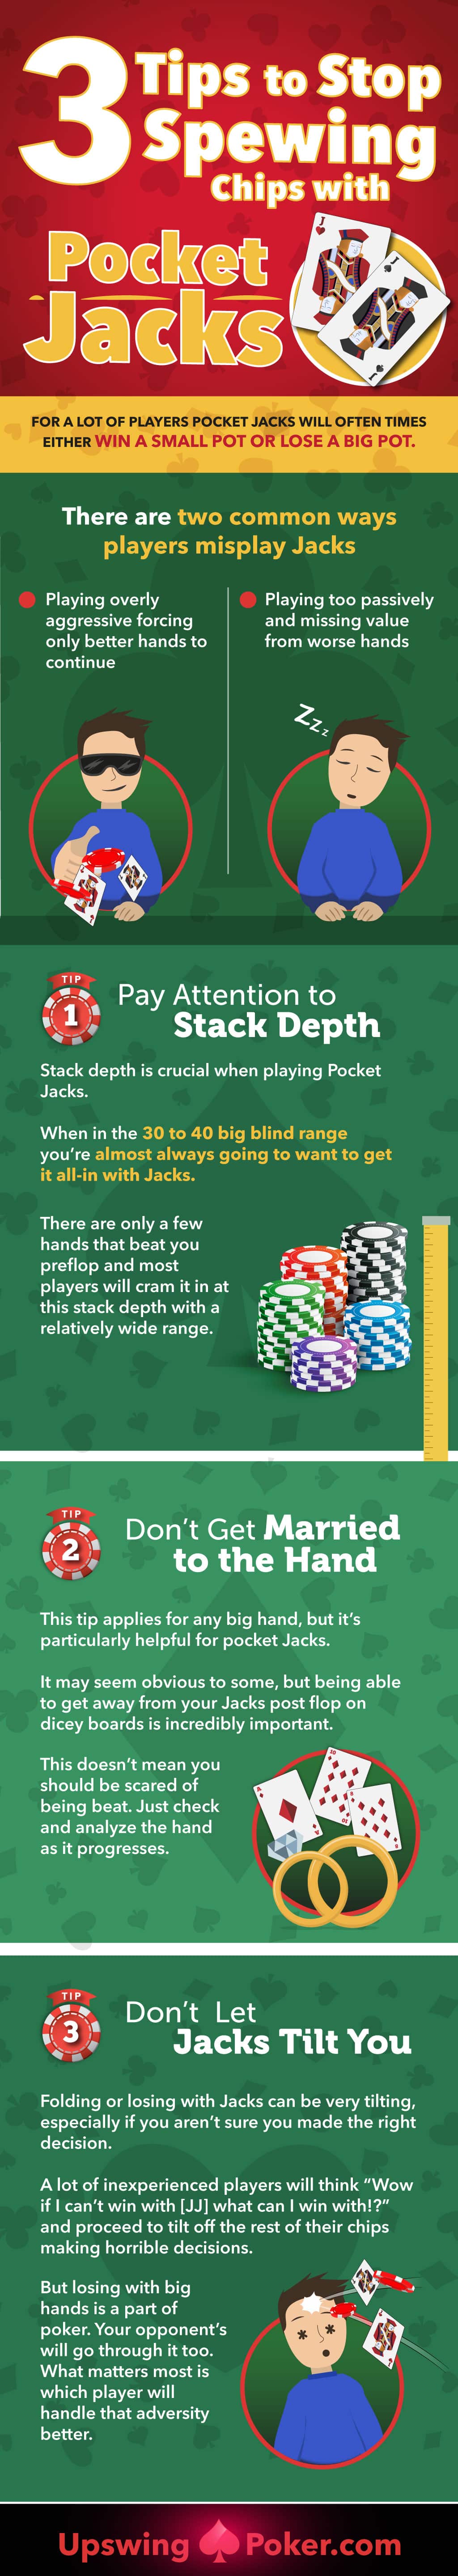 How to Play Pocket Jacks Properly - Upswing Poker